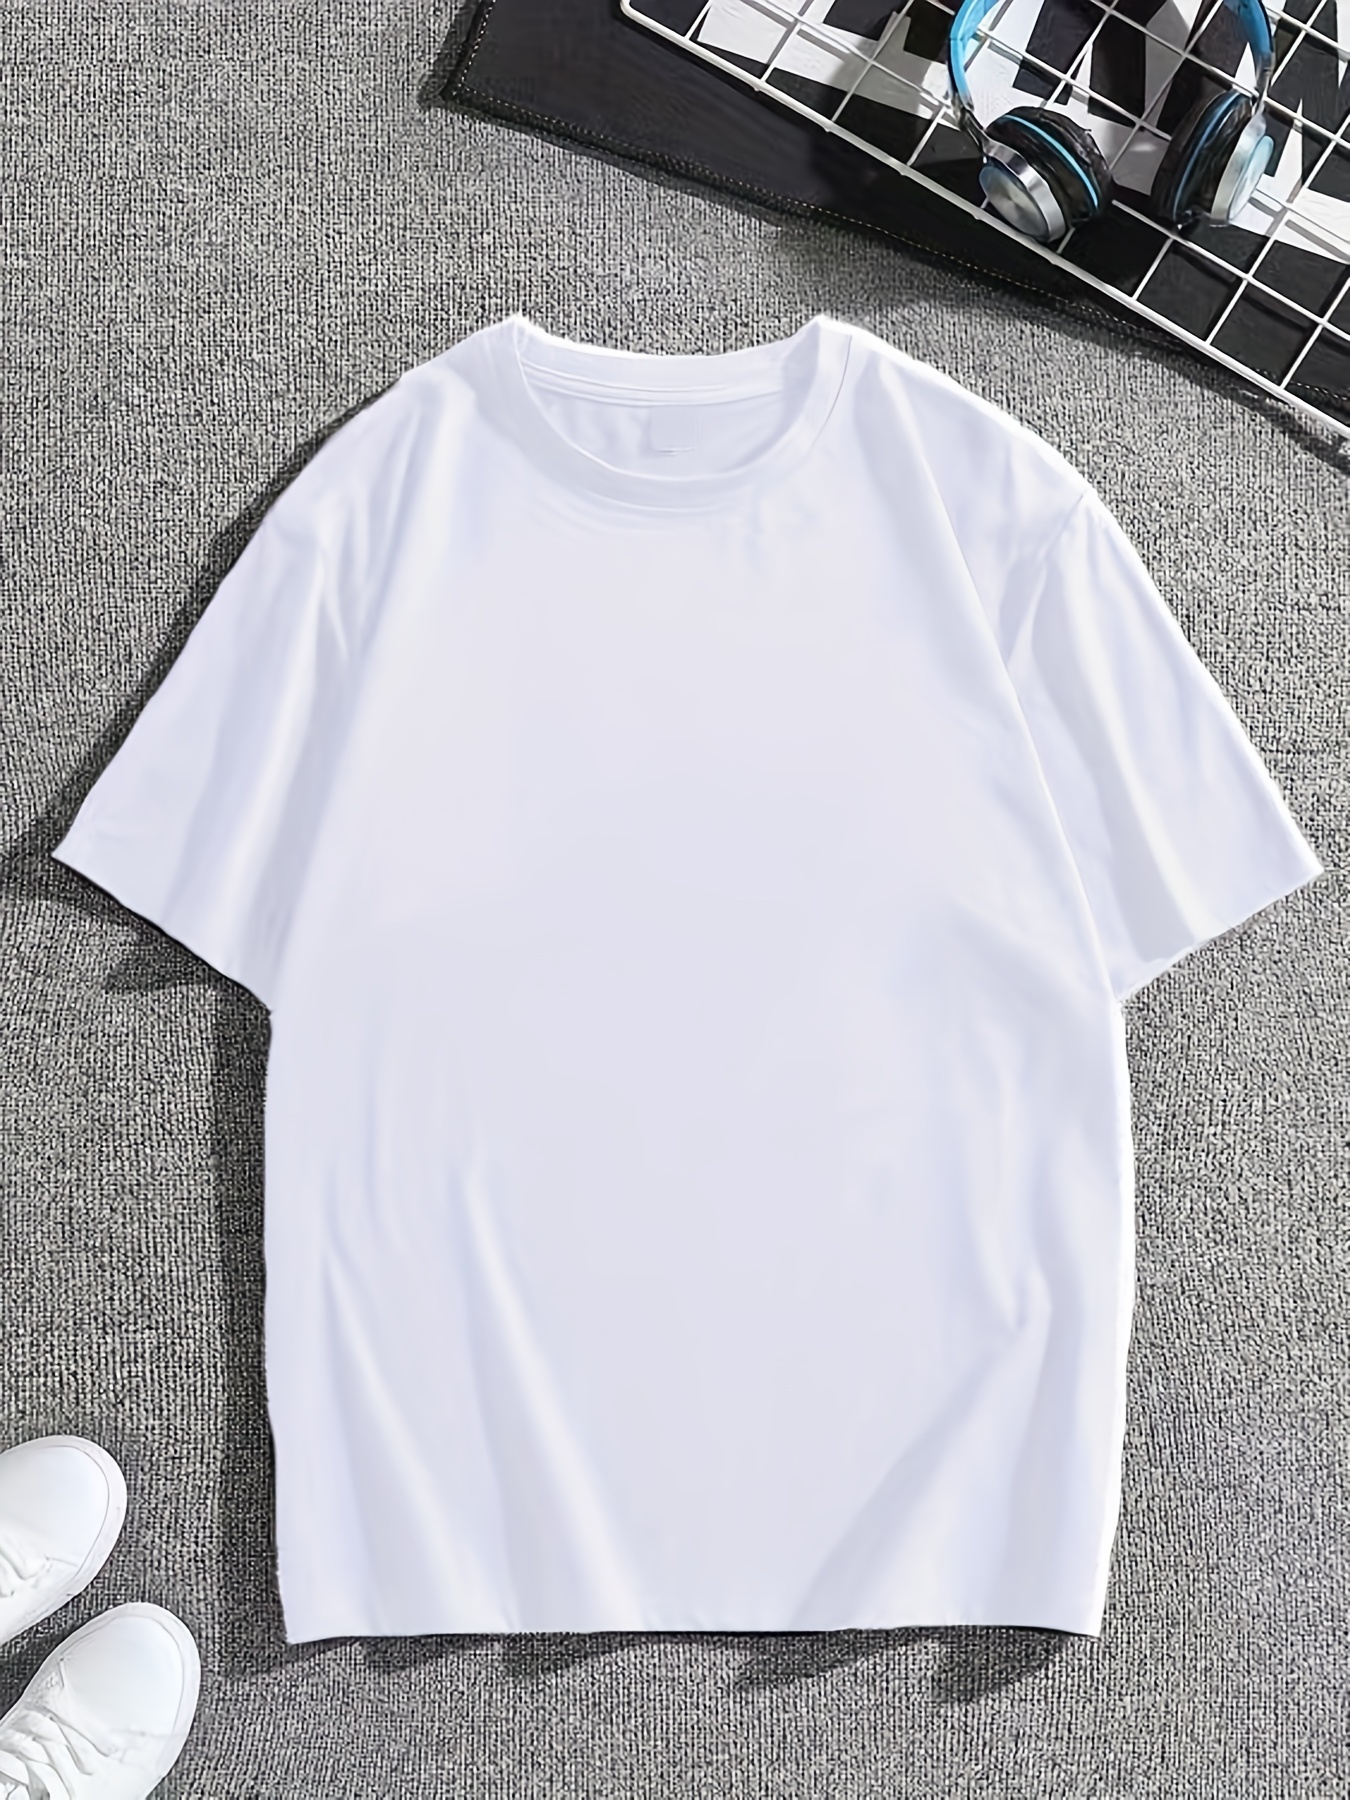 Camiseta basica blanca. Camiseta de mujer talla grande.